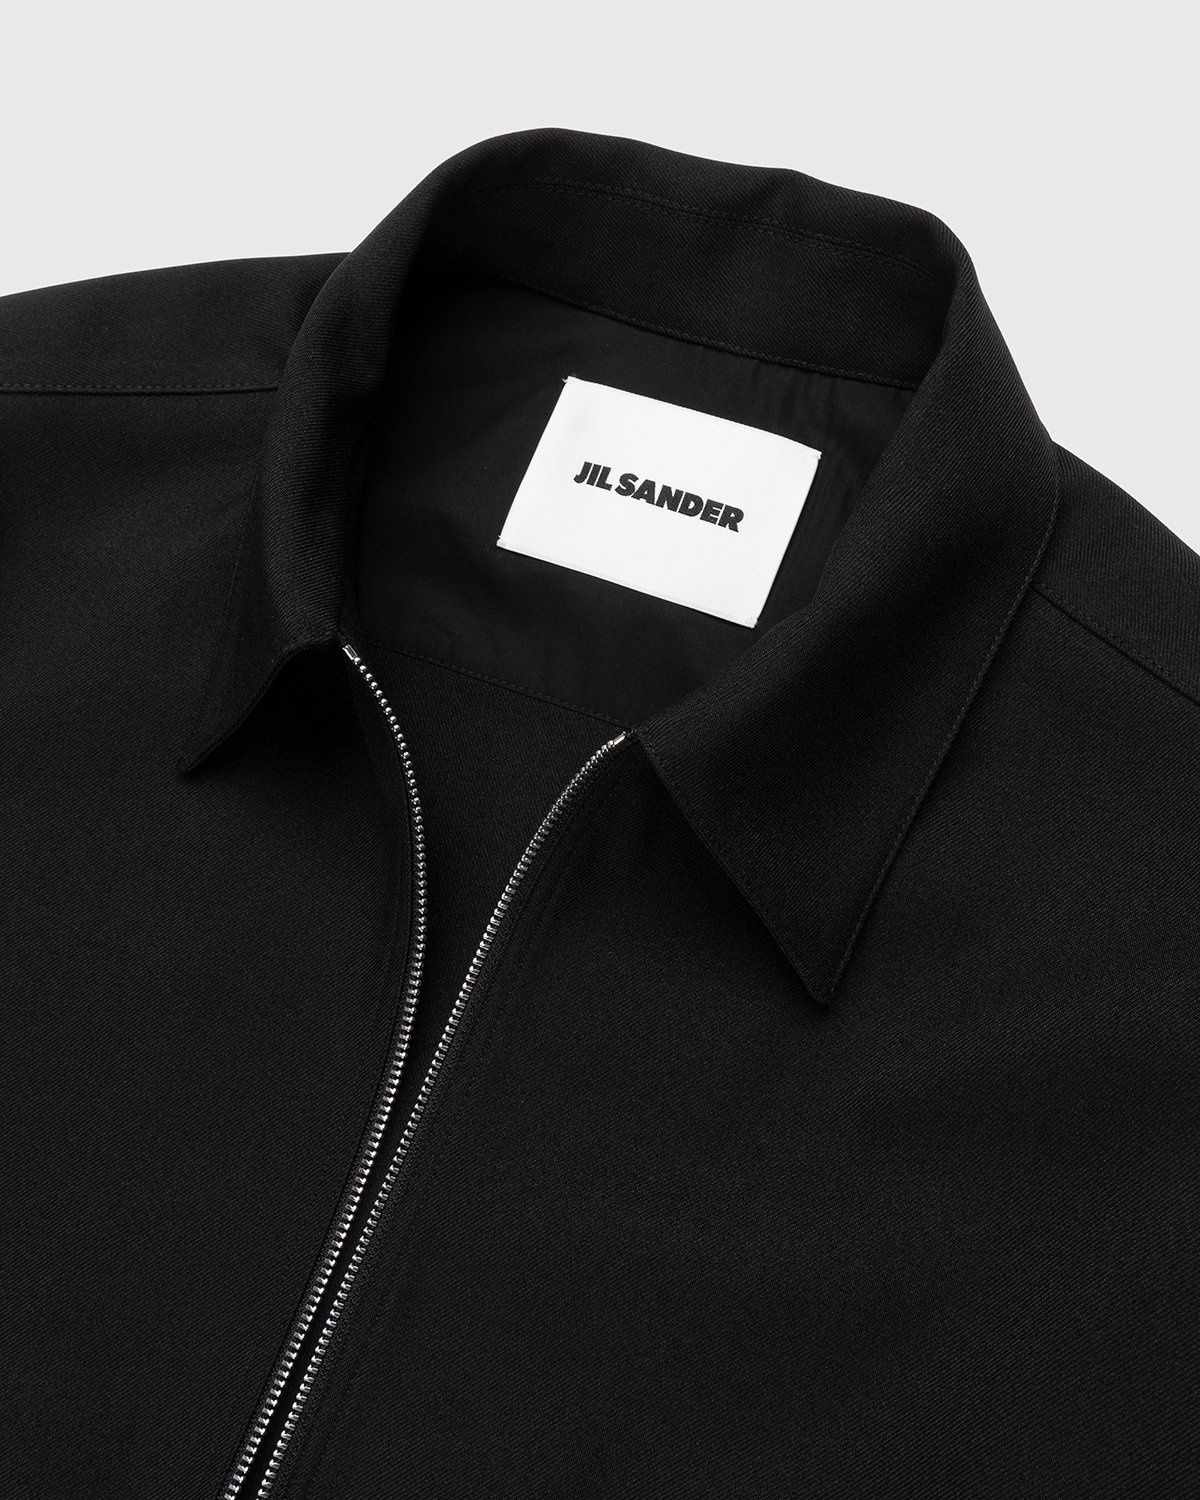 Jil Sander – Full Zip Shirt Black | Highsnobiety Shop